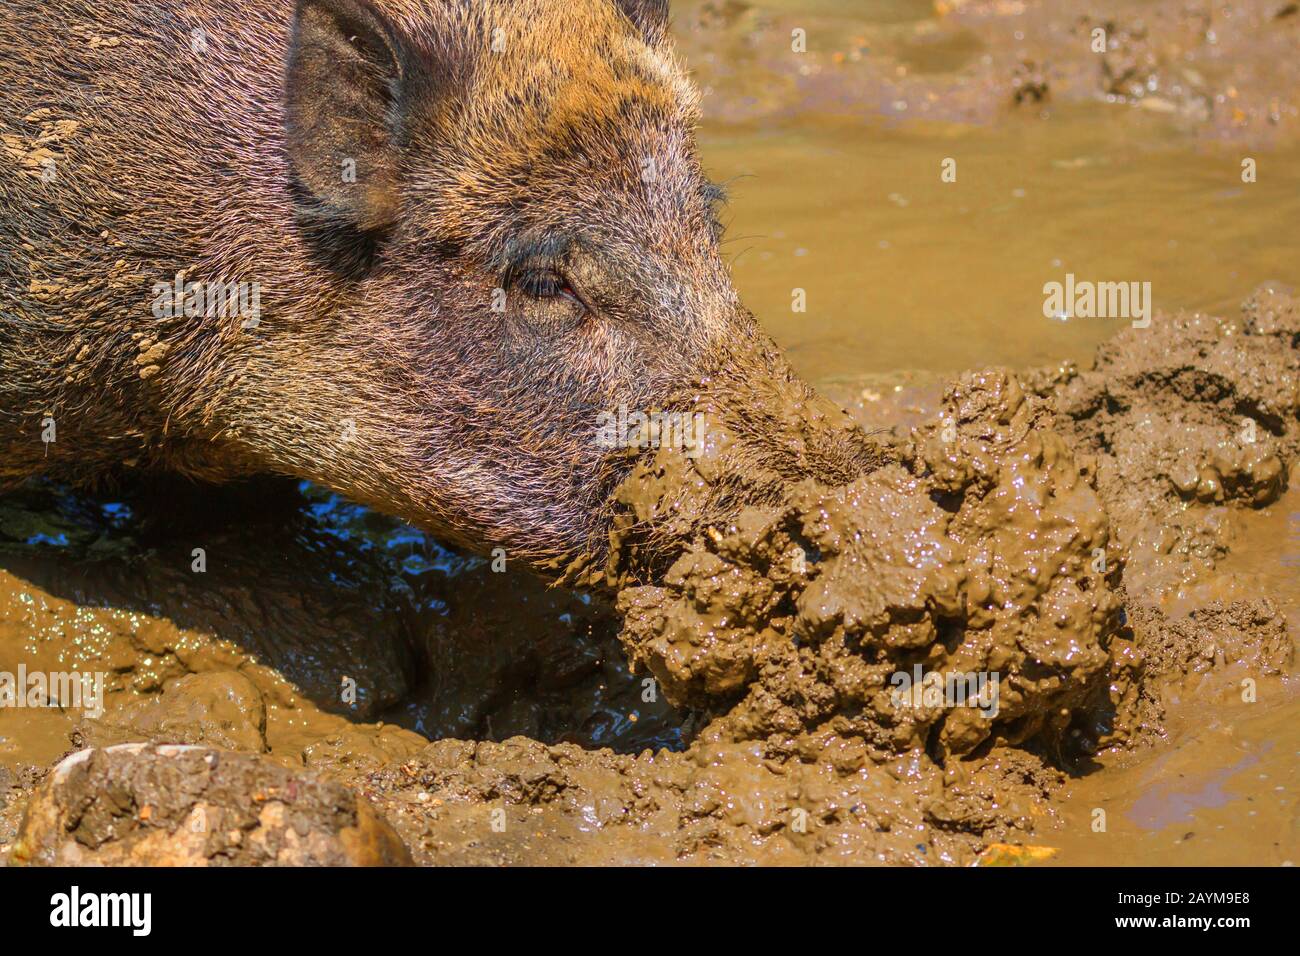 wild boar, pig, wild boar (Sus scrofa), pushes mud with its trunk, Austria, Tyrol Stock Photo